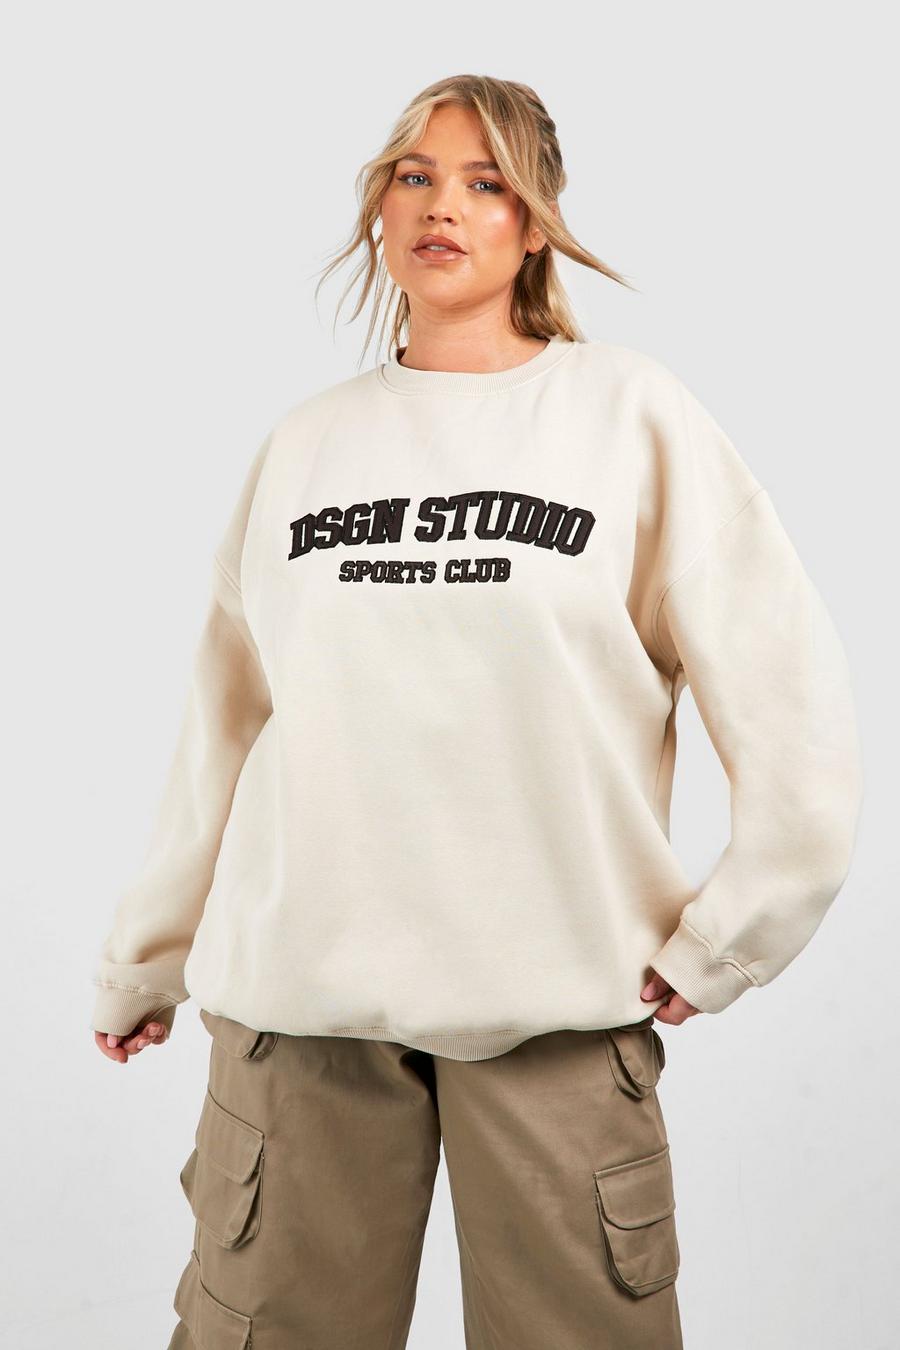 Plus Sweatshirt mit Dsgn Studio Applikation, Stone